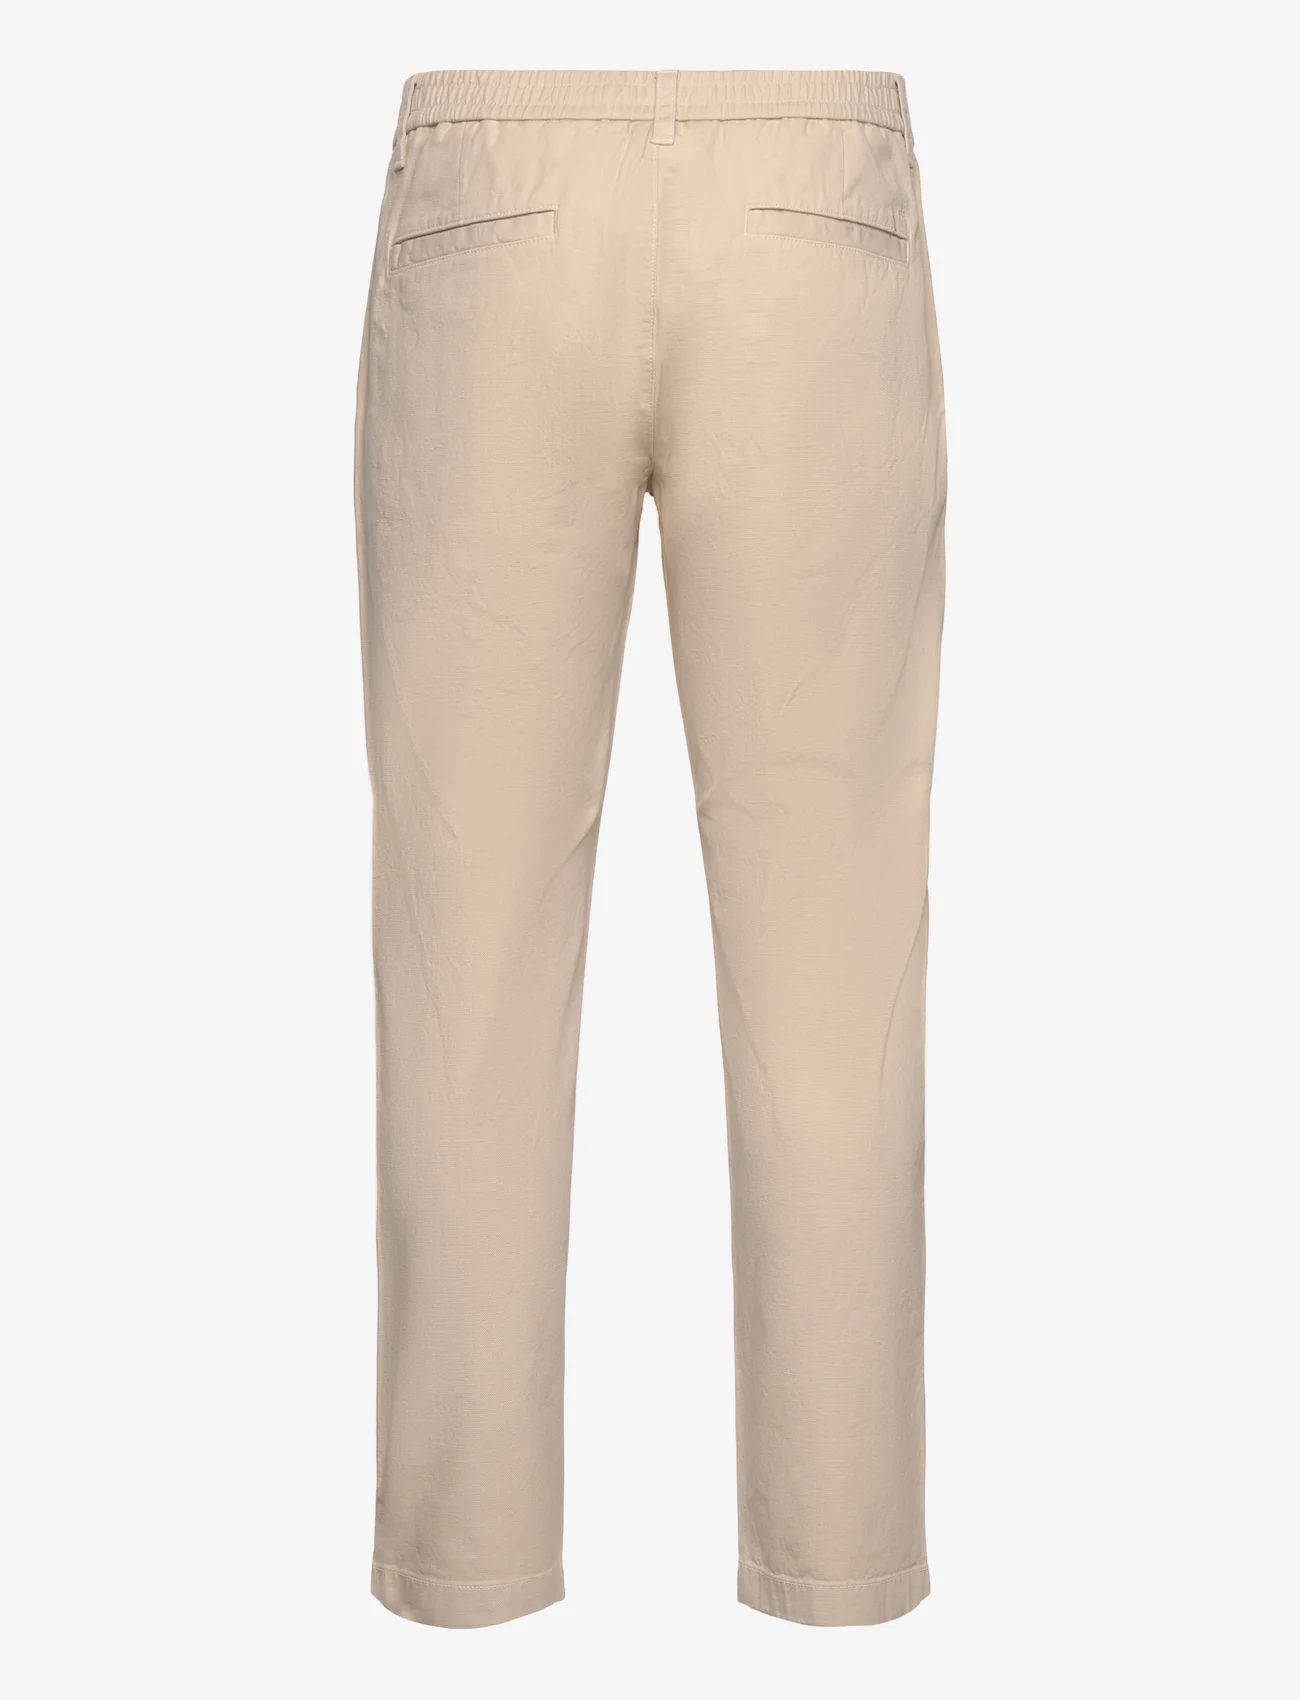 Marc O'Polo - WOVEN PANTS - casual - linen white - 1